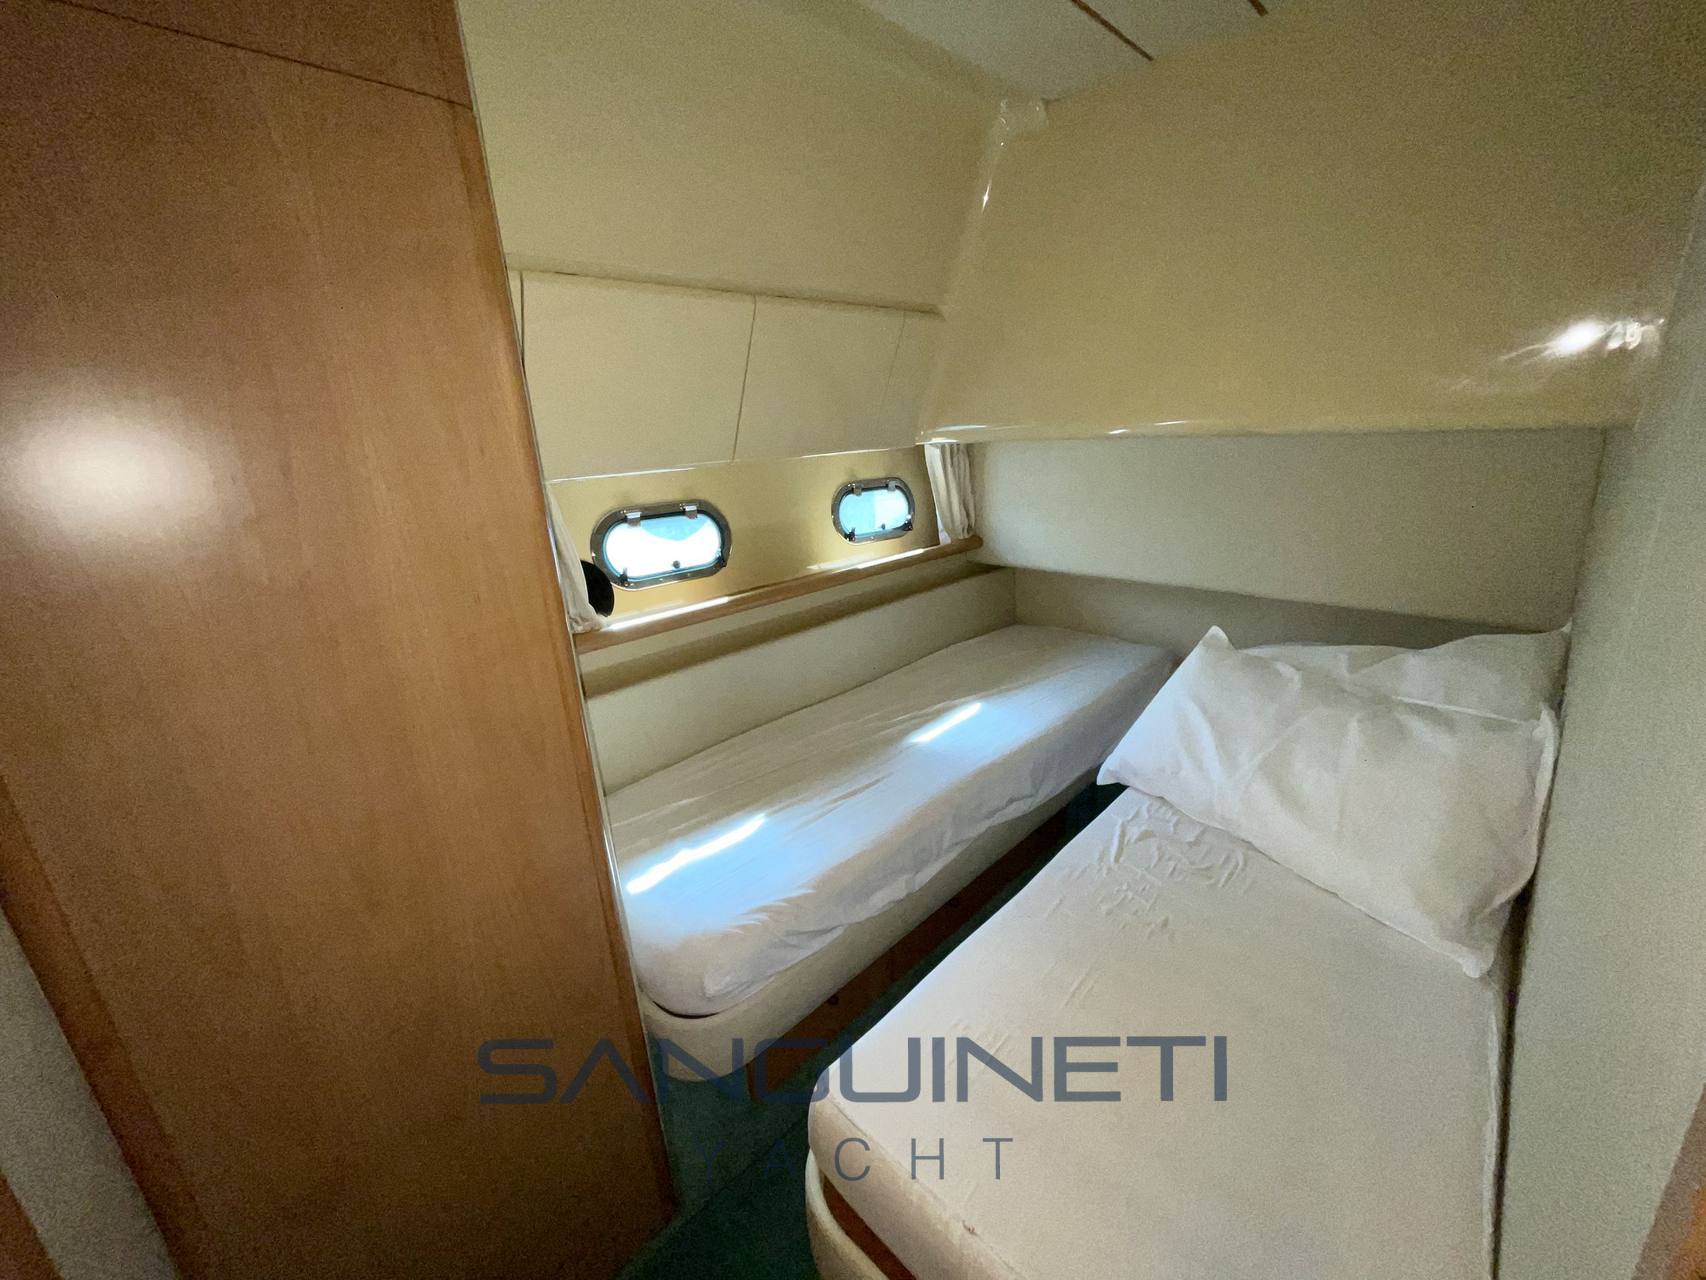 Ferretti 120 Inside: detail